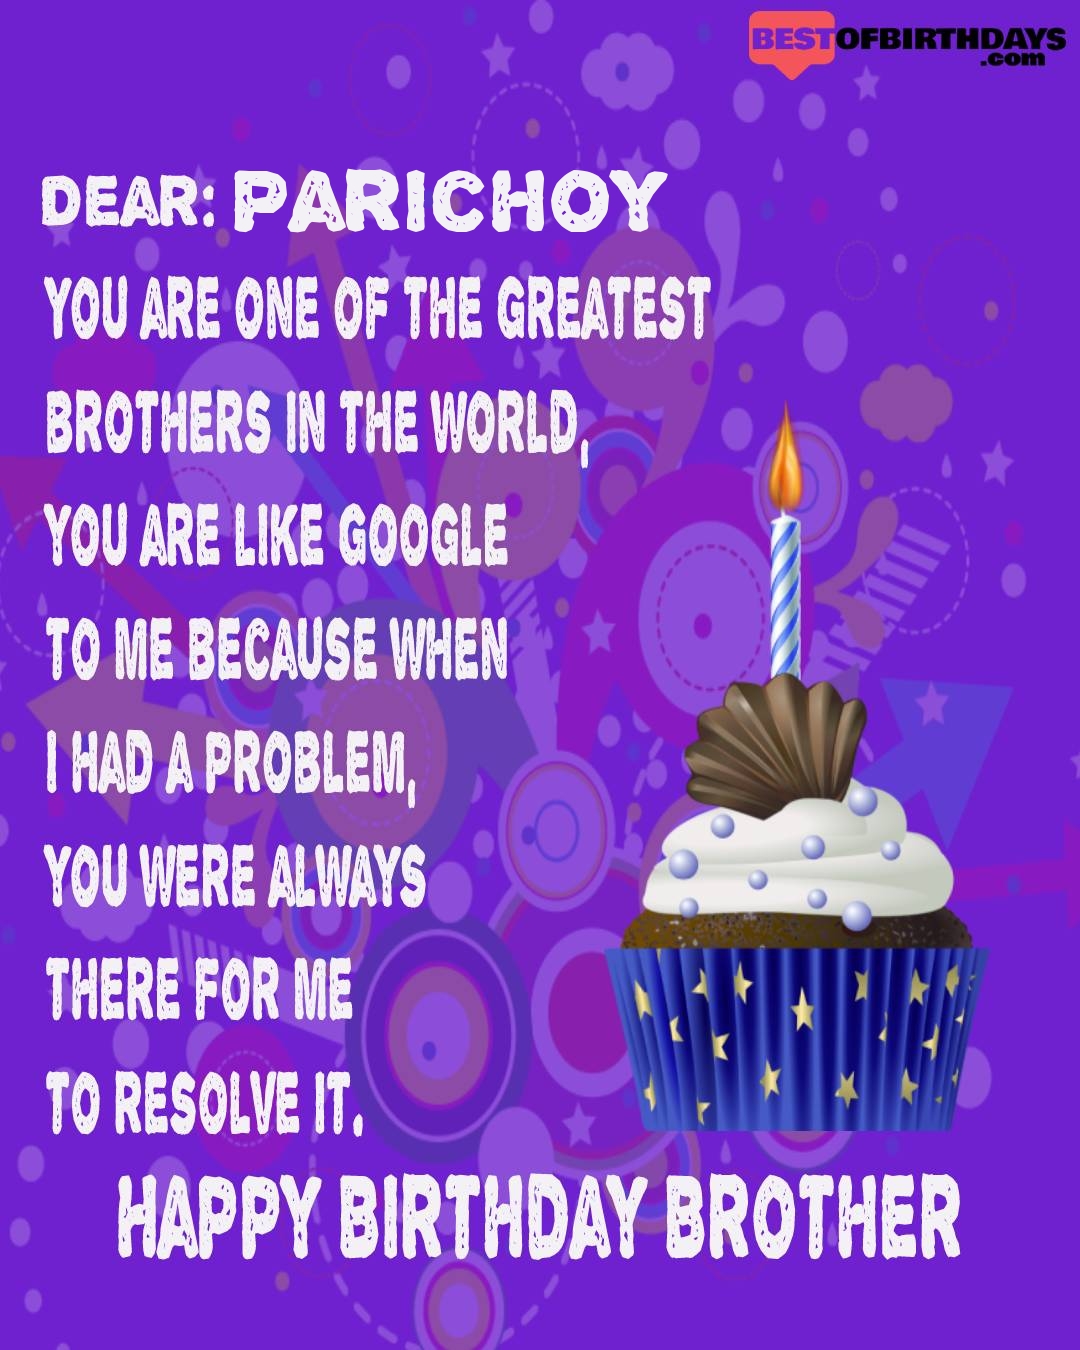 Happy birthday parichoy bhai brother bro